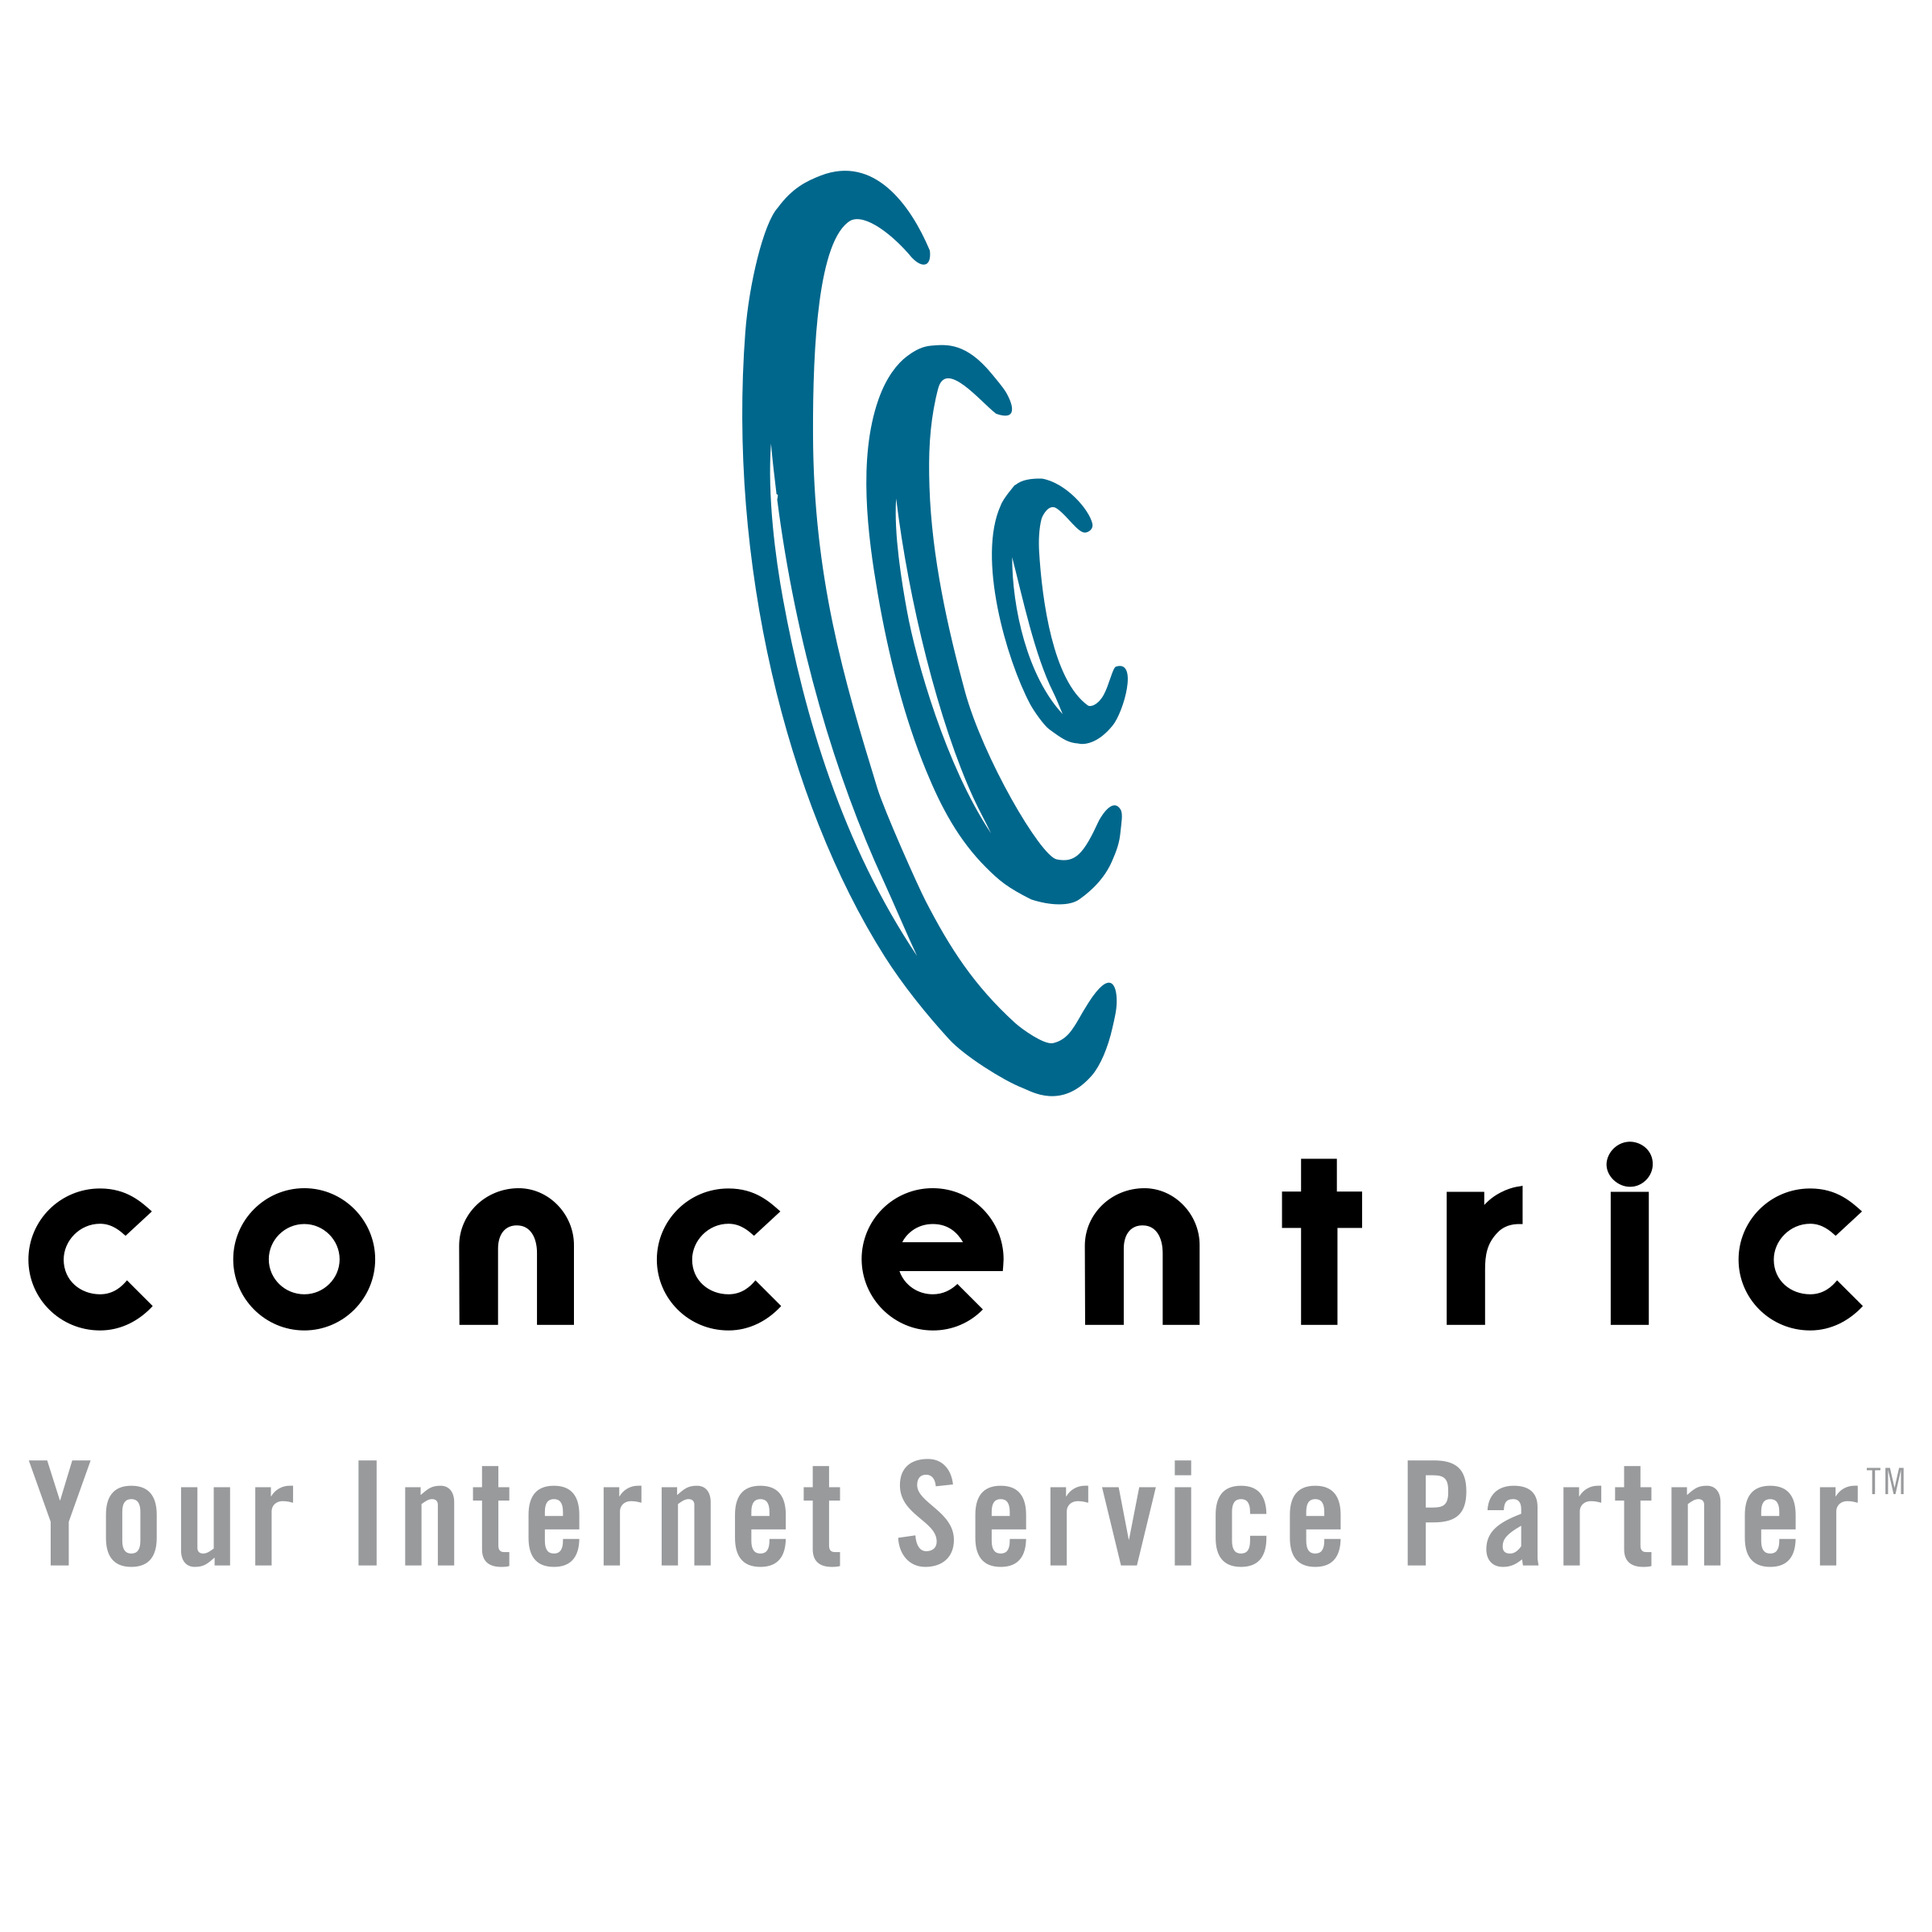 Concentric Logo - Concentric Logo PNG Transparent & SVG Vector - Freebie Supply